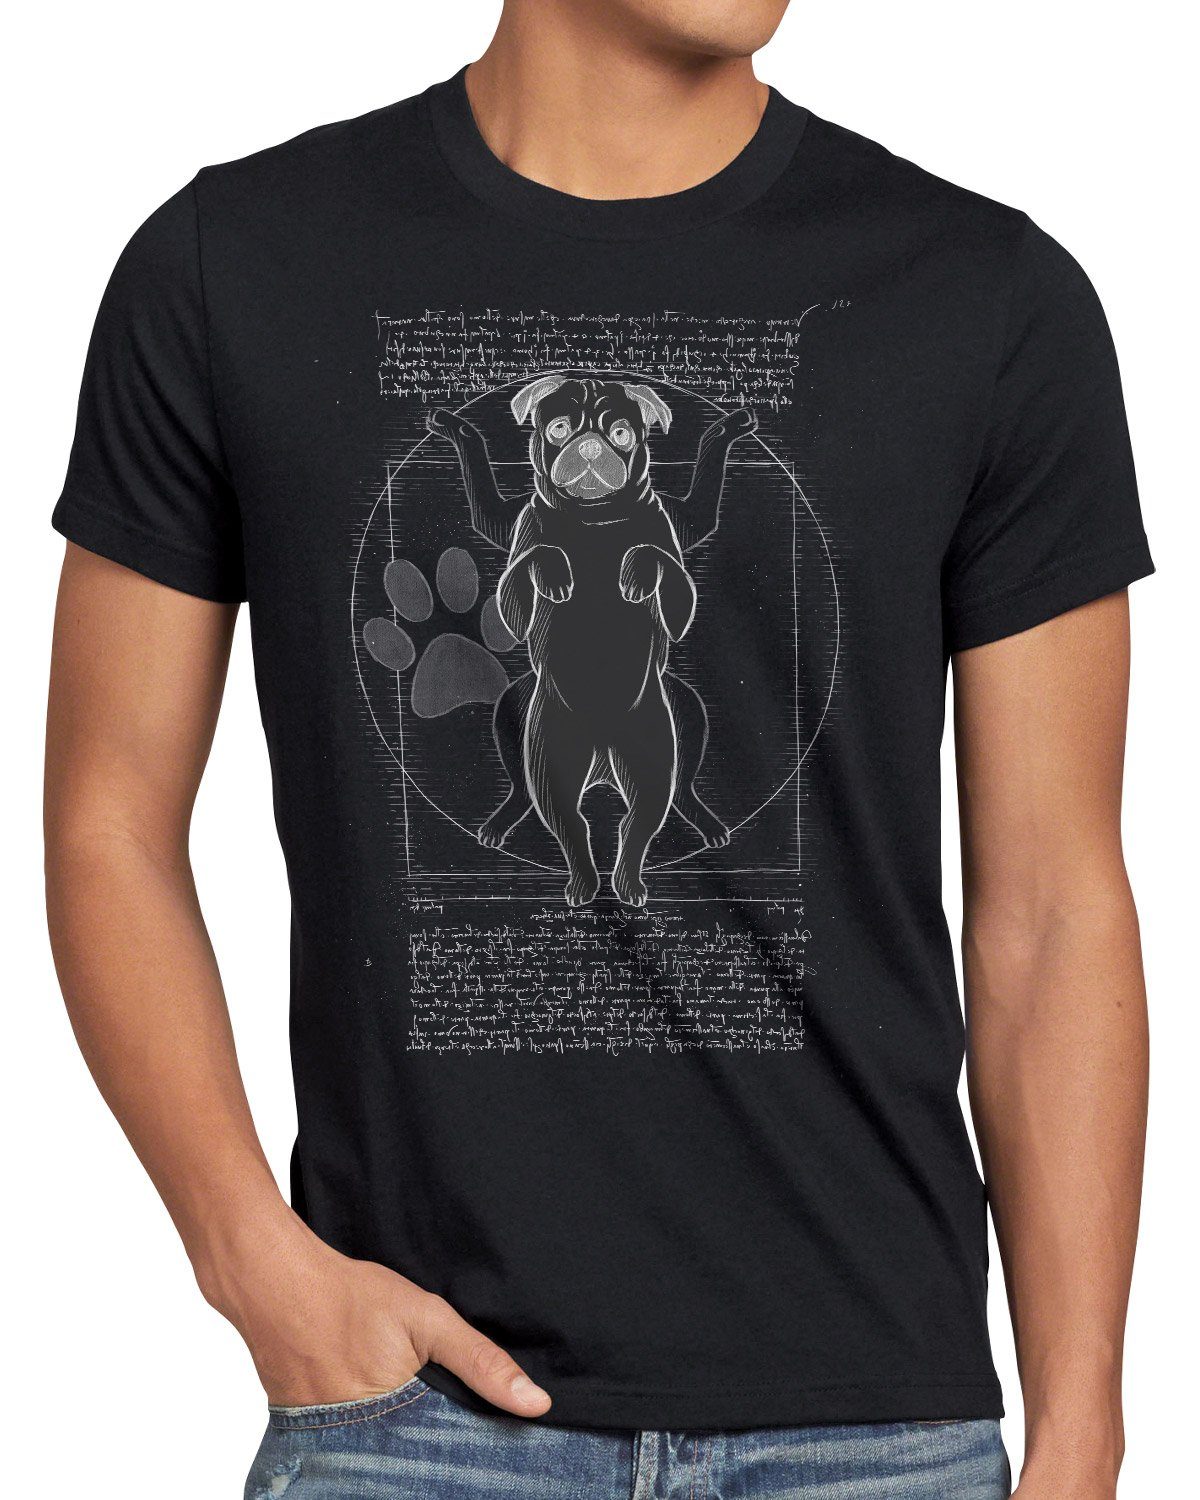 style3 Print-Shirt hund schwarz T-Shirt da Herren Vitruvianischer Mops vinci